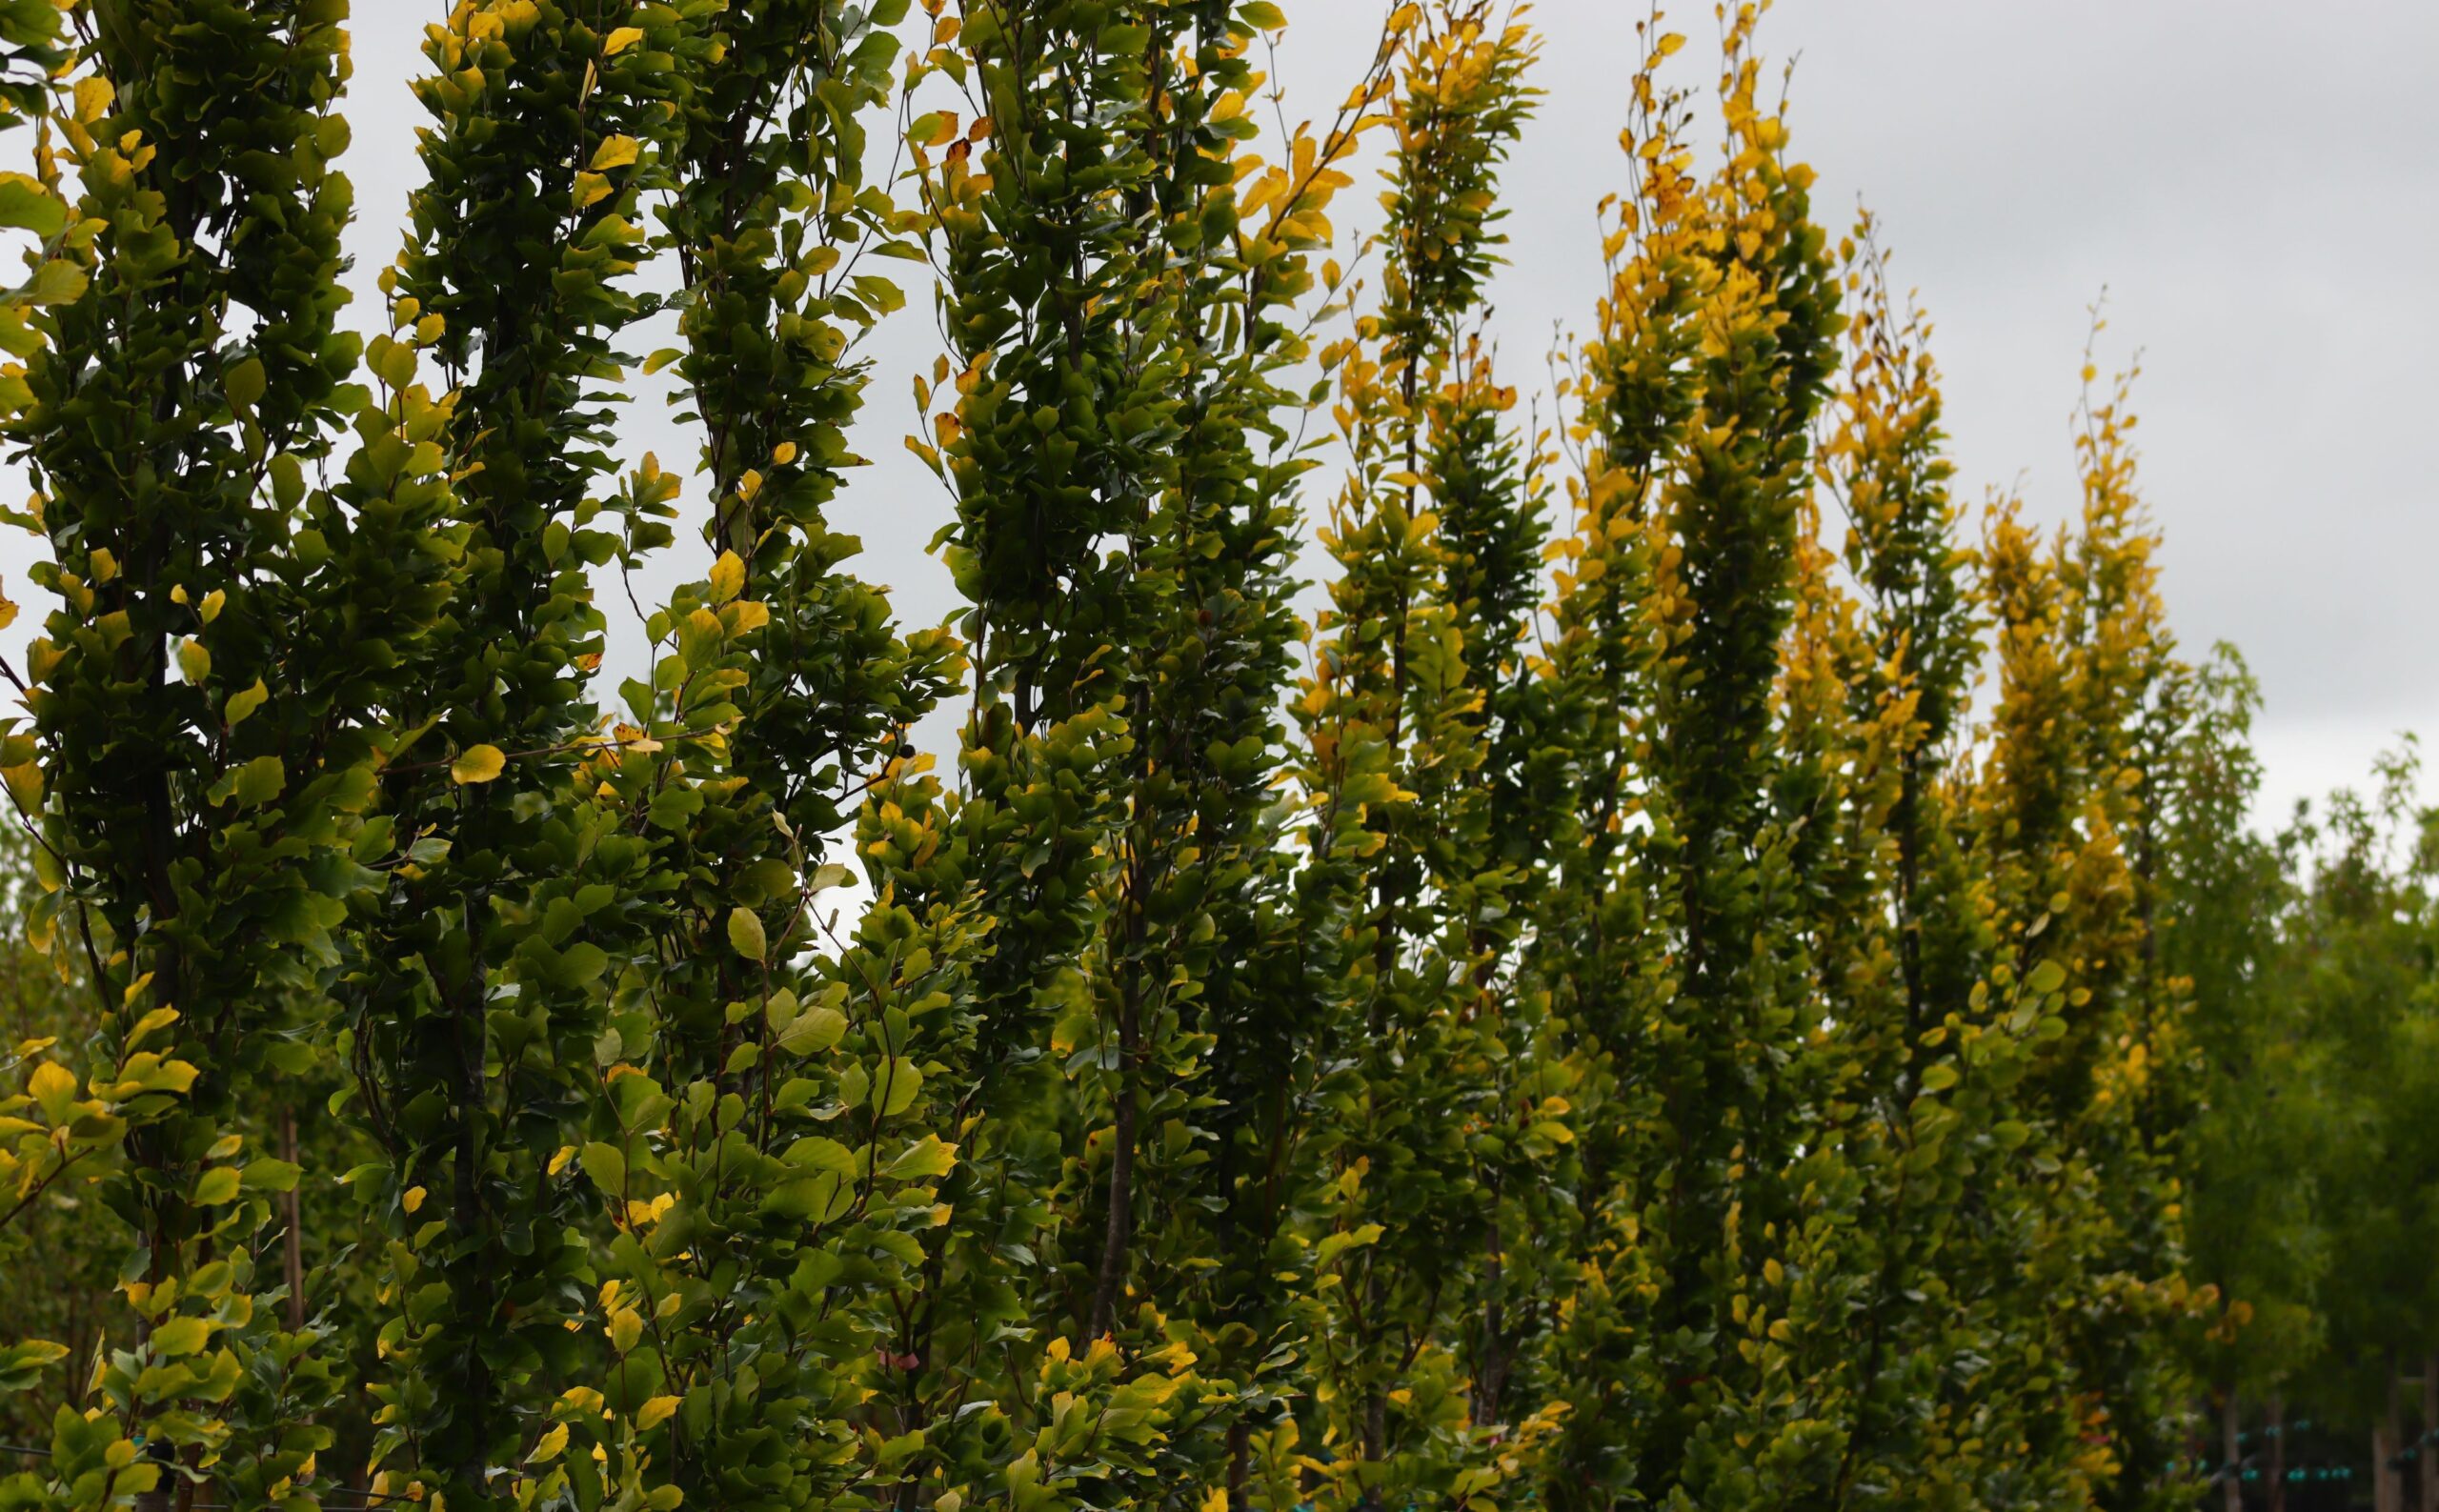 Fagus sylvatica Dawyck Gold yellow and green foliage